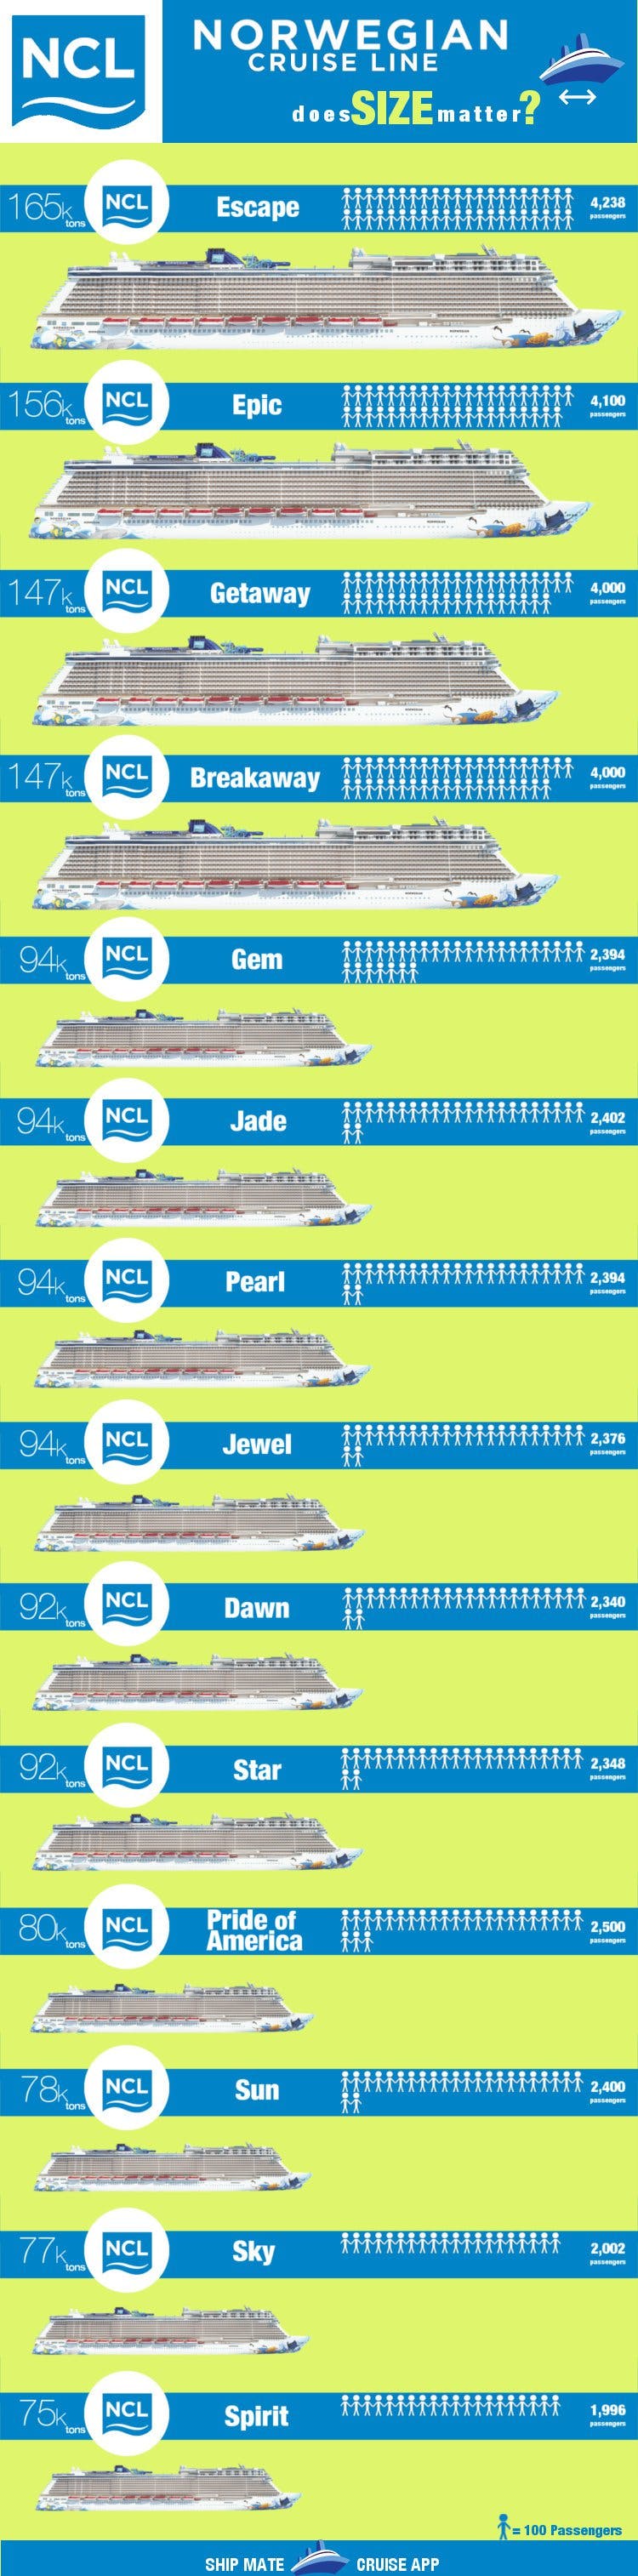 ncl cruise ship size comparison